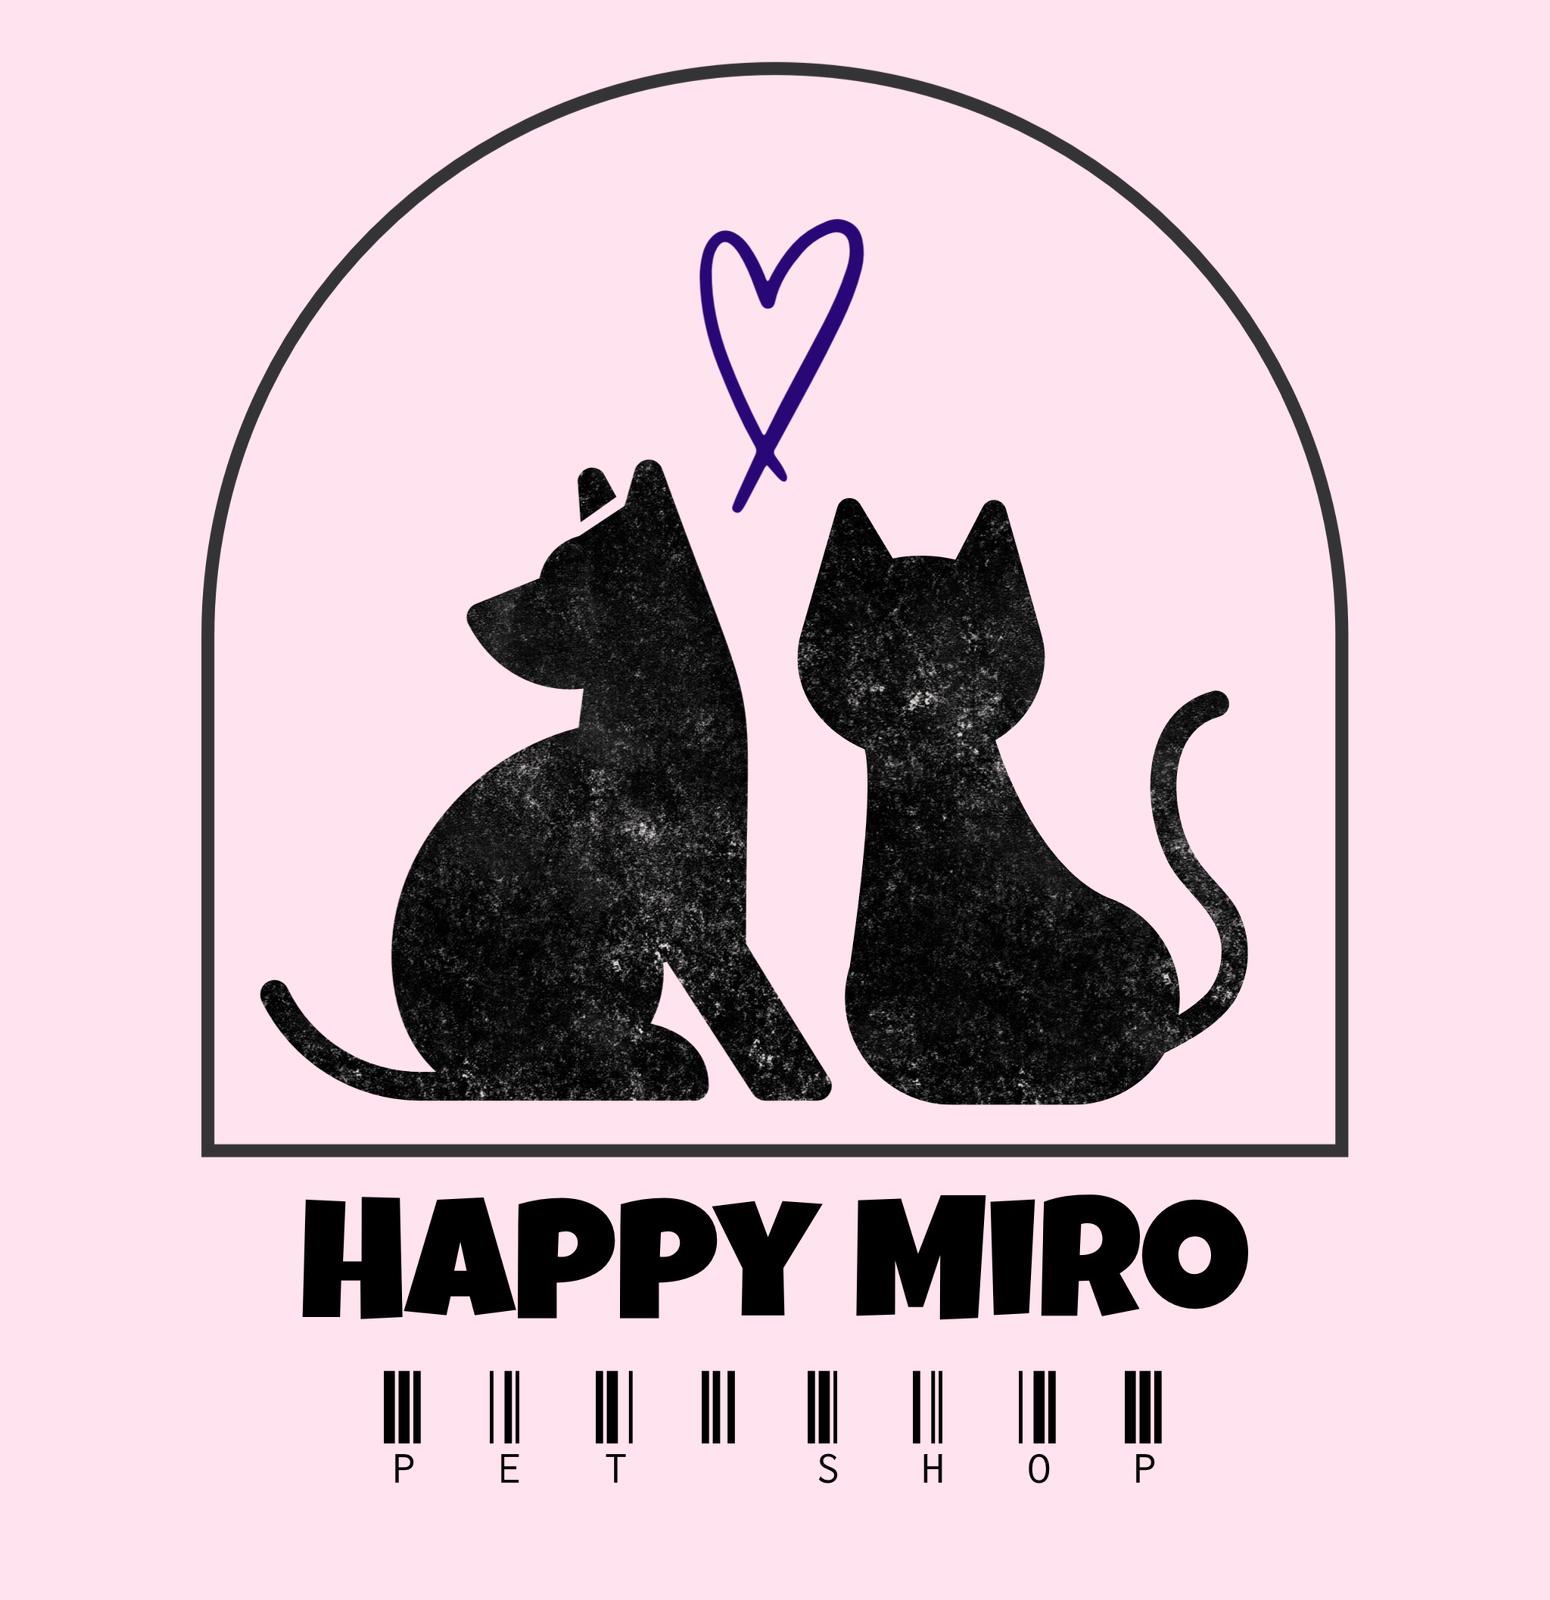 Happy Miro Pet Shop